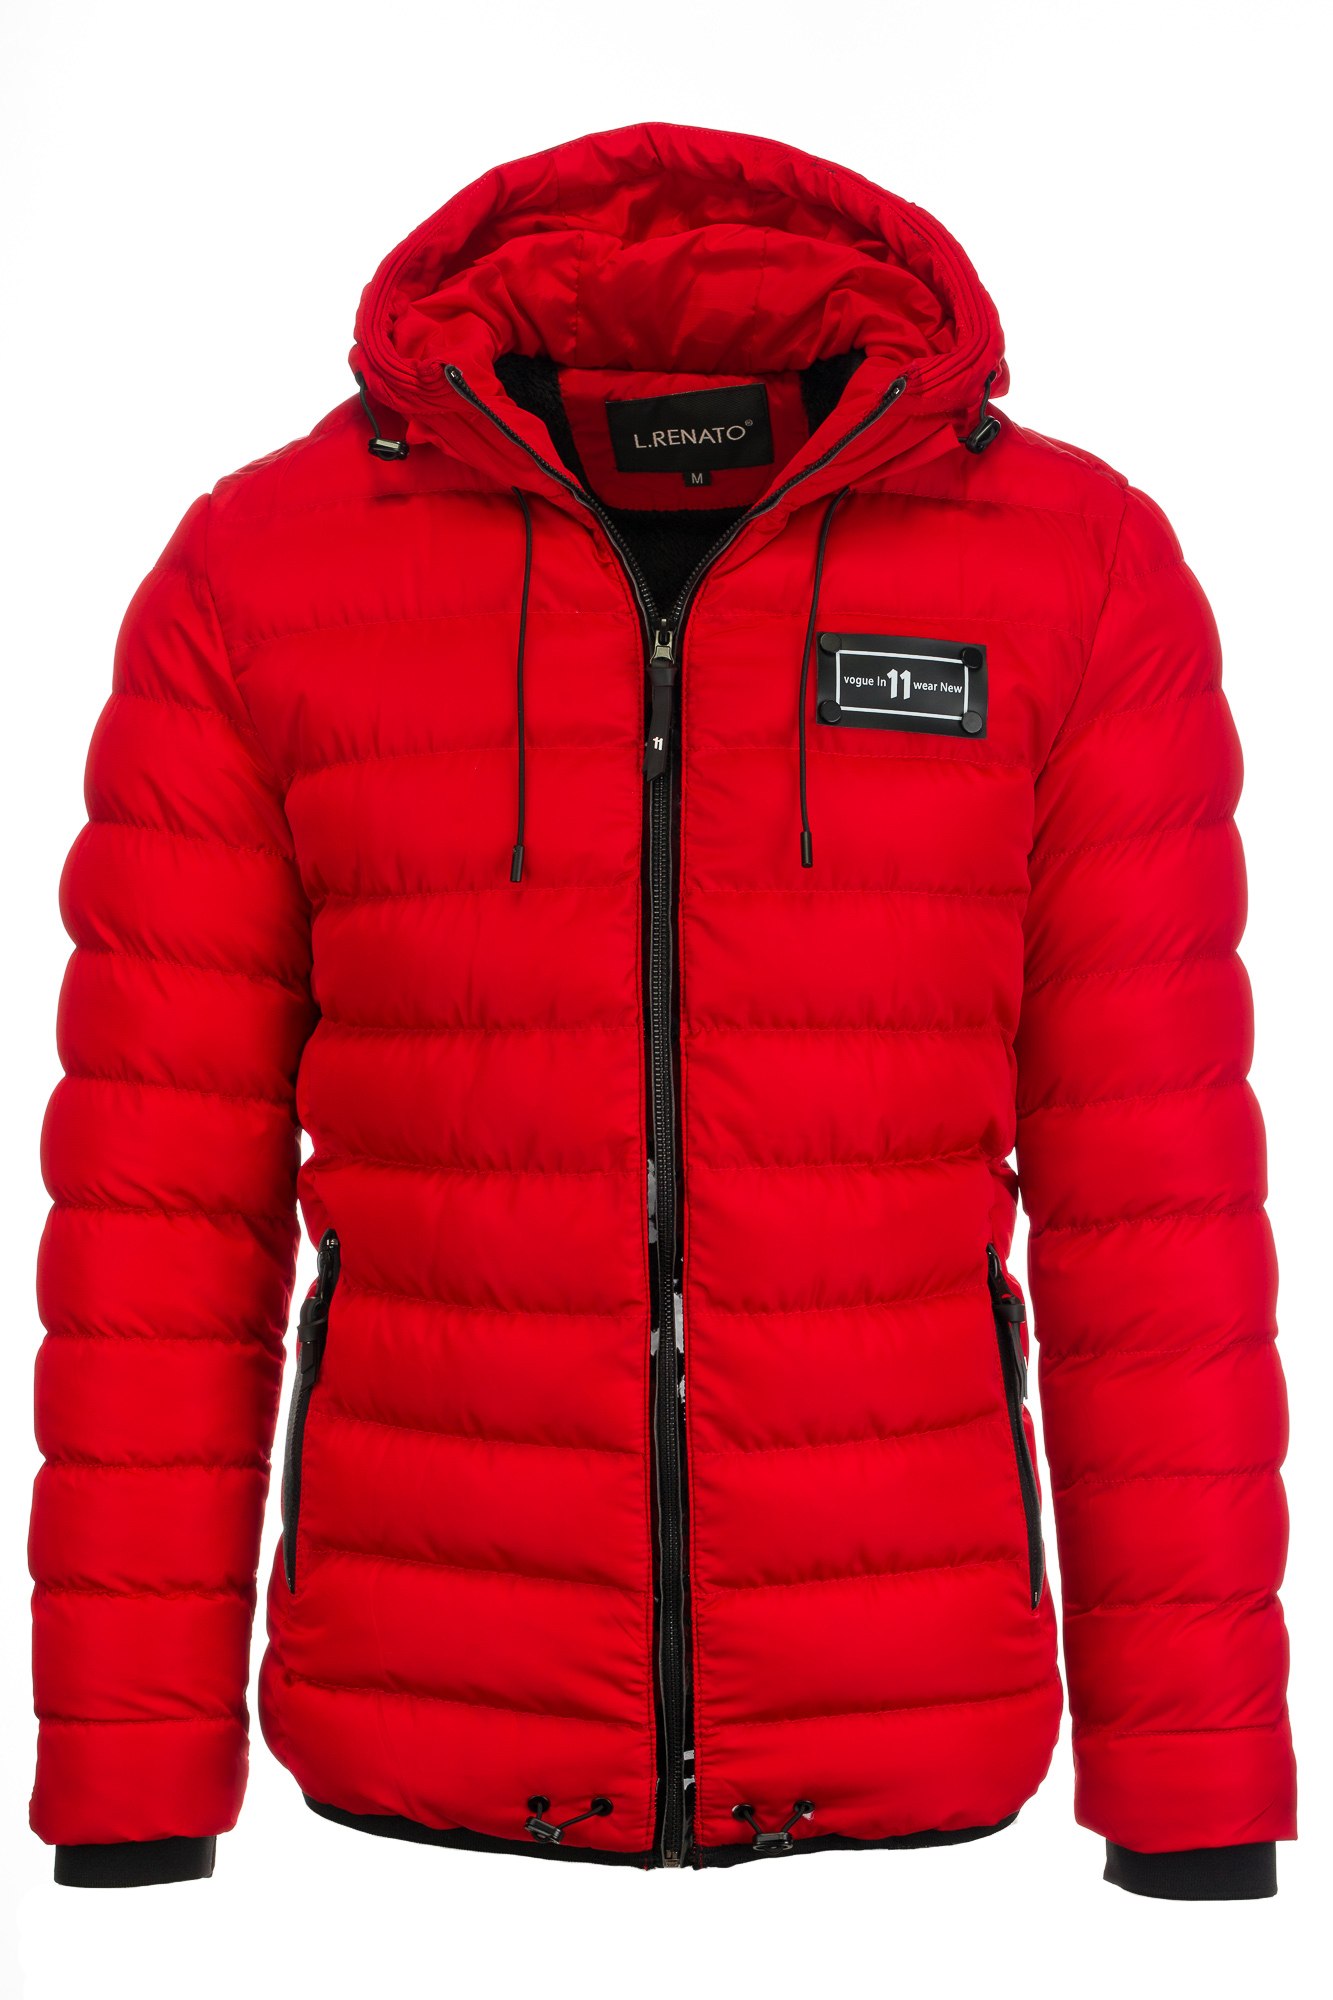 Мужские куртки red. Savage красная куртка 40149. Пуховик Finn Flare мужской красный. Ice Energy куртка мужская зимняя красная. ZST 3xl куртка.